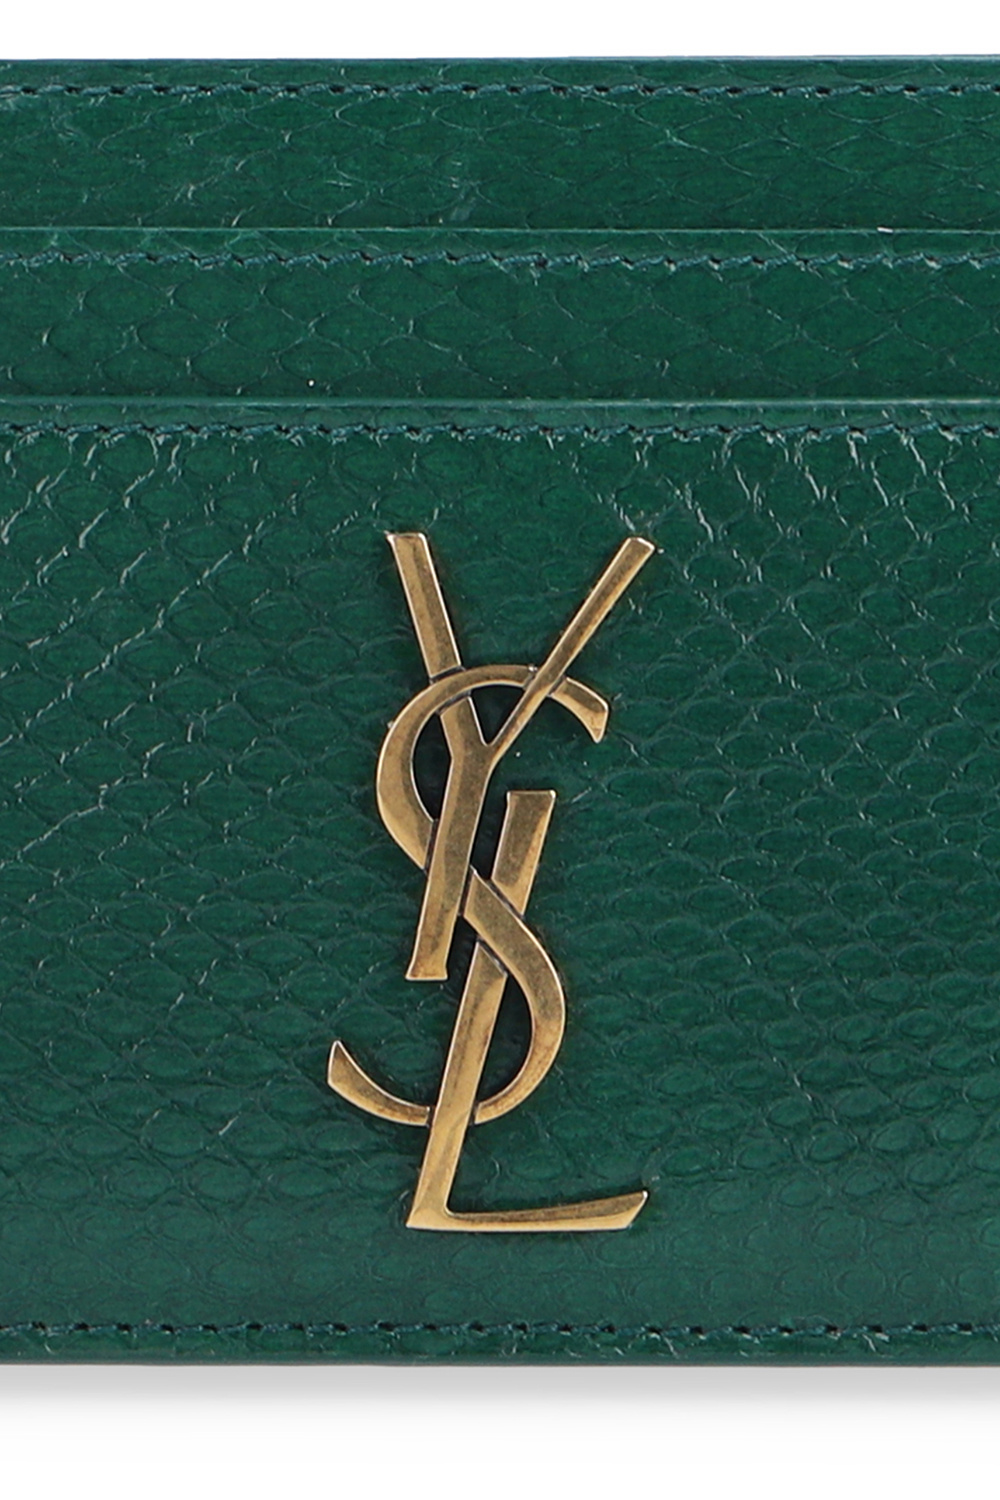 ysl card holder green